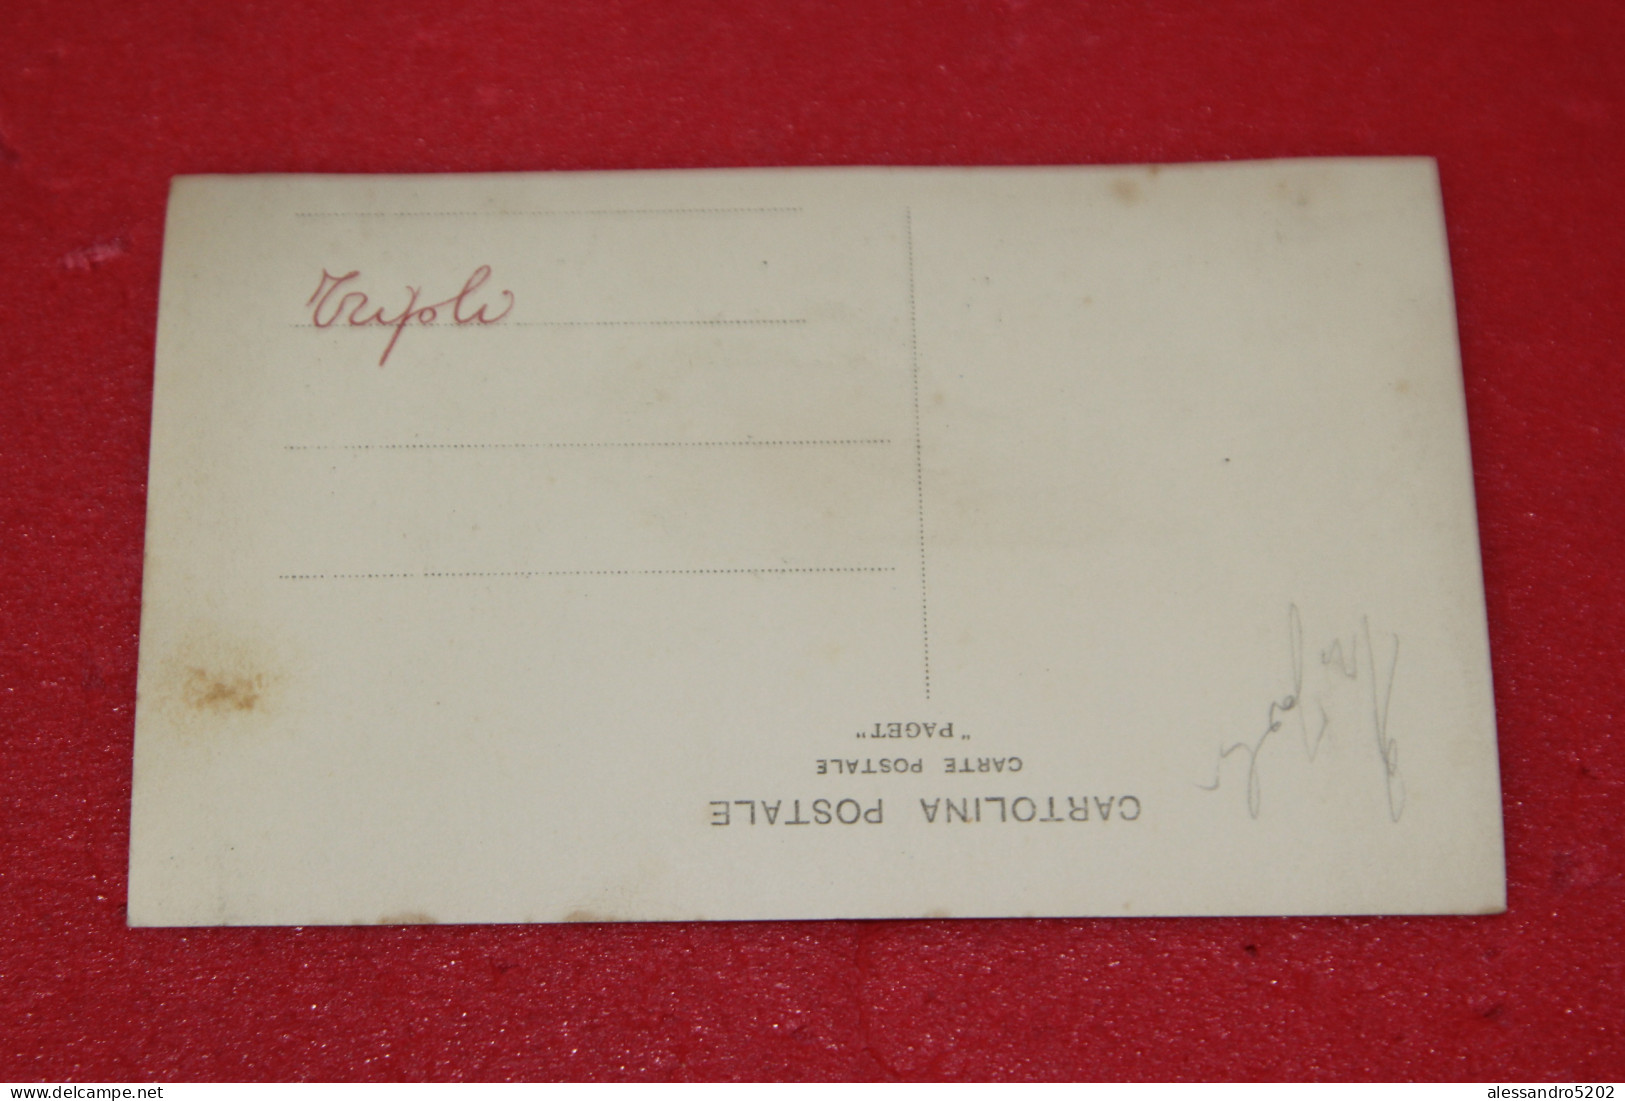 Libya Tripoli Foto Cartolina Scattata Nel 1939 Da Album Crociera NV - Libya